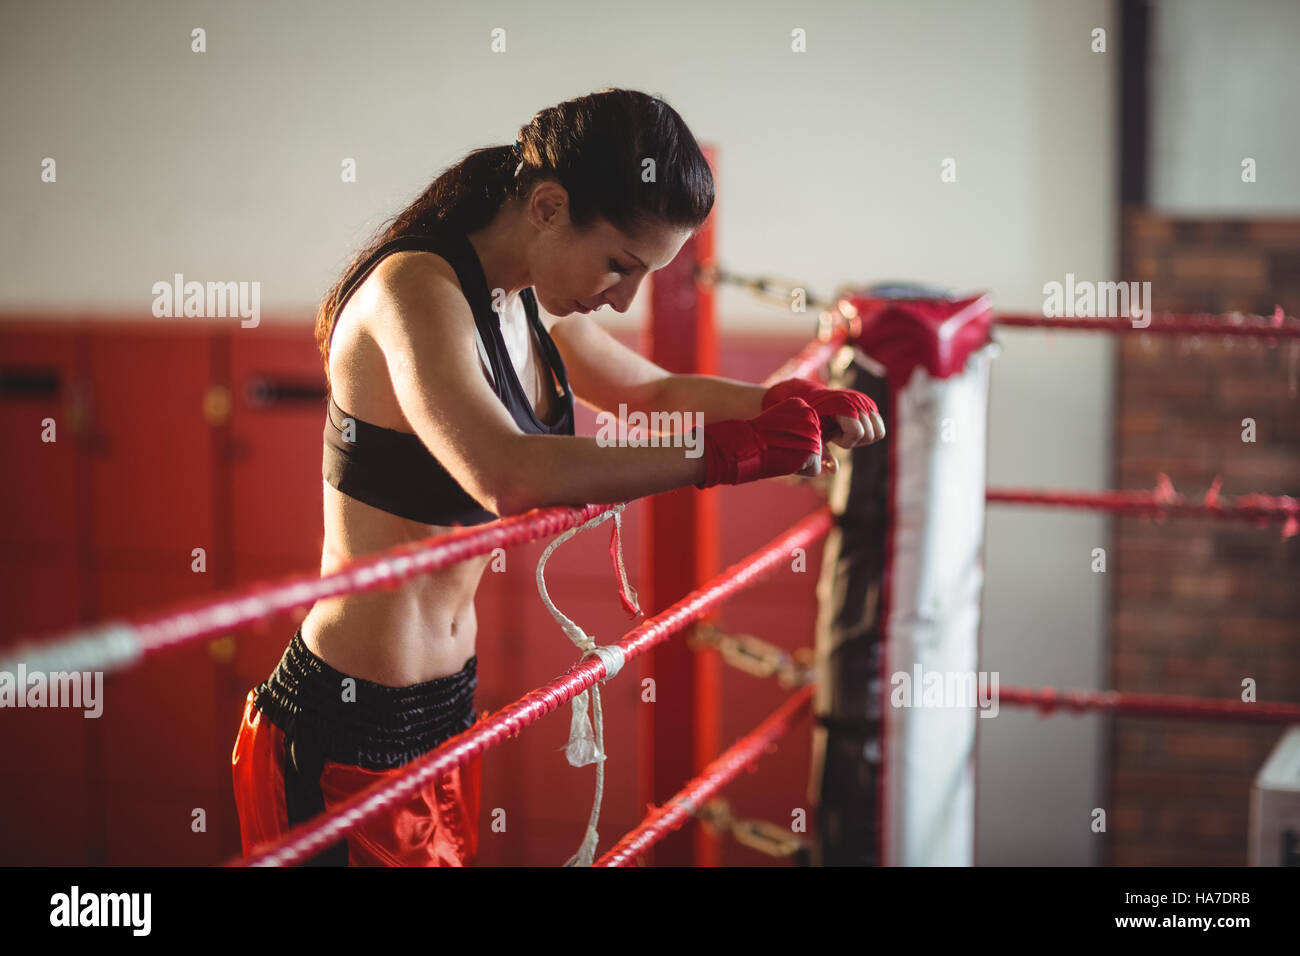 Boxerin im Boxring stehen Stockfoto